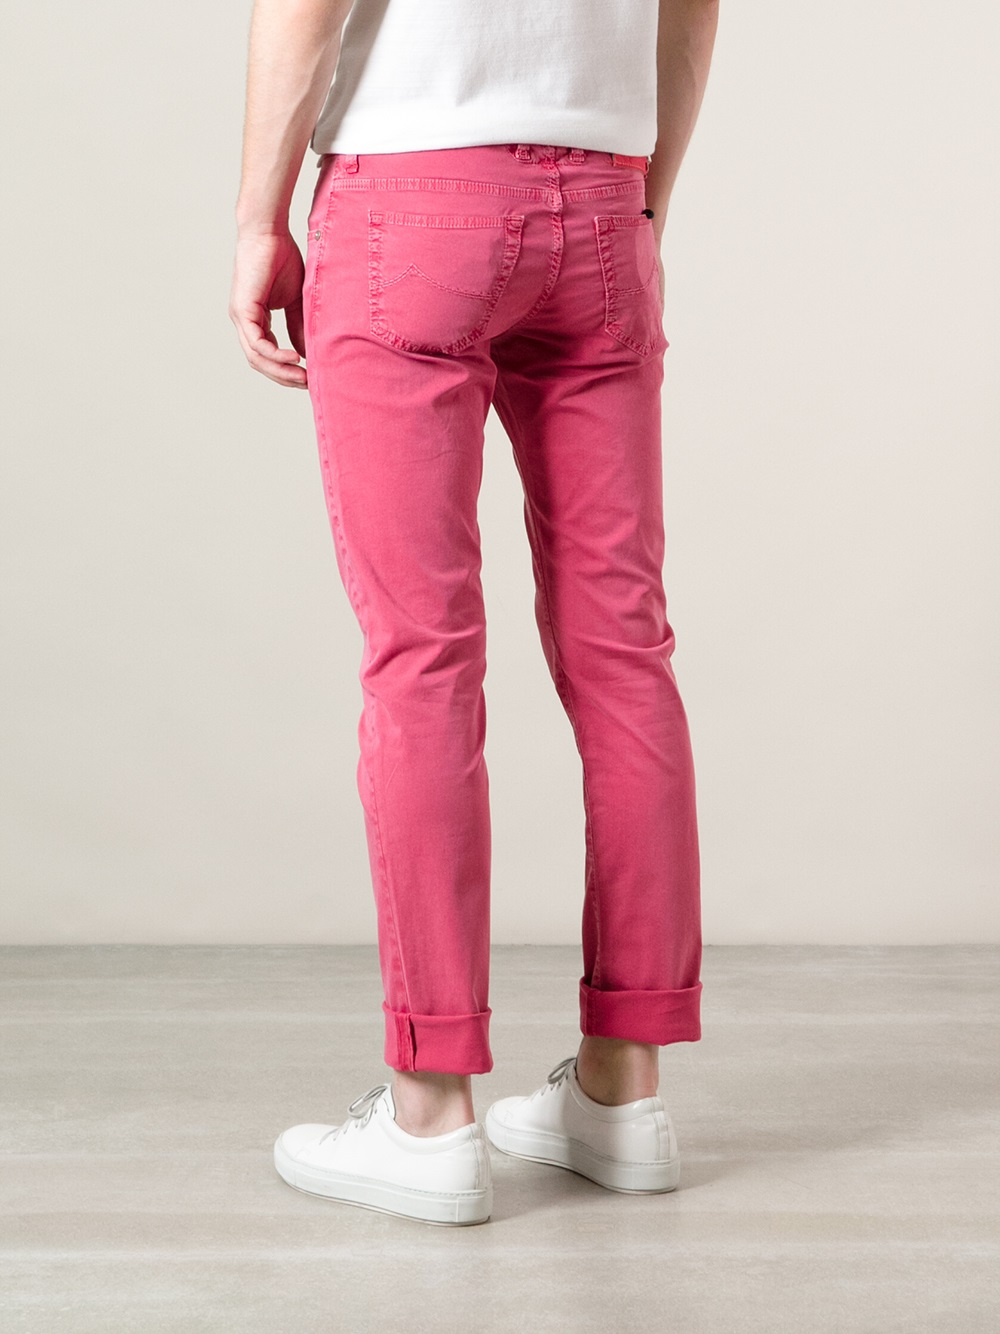 pink skinny jeans men